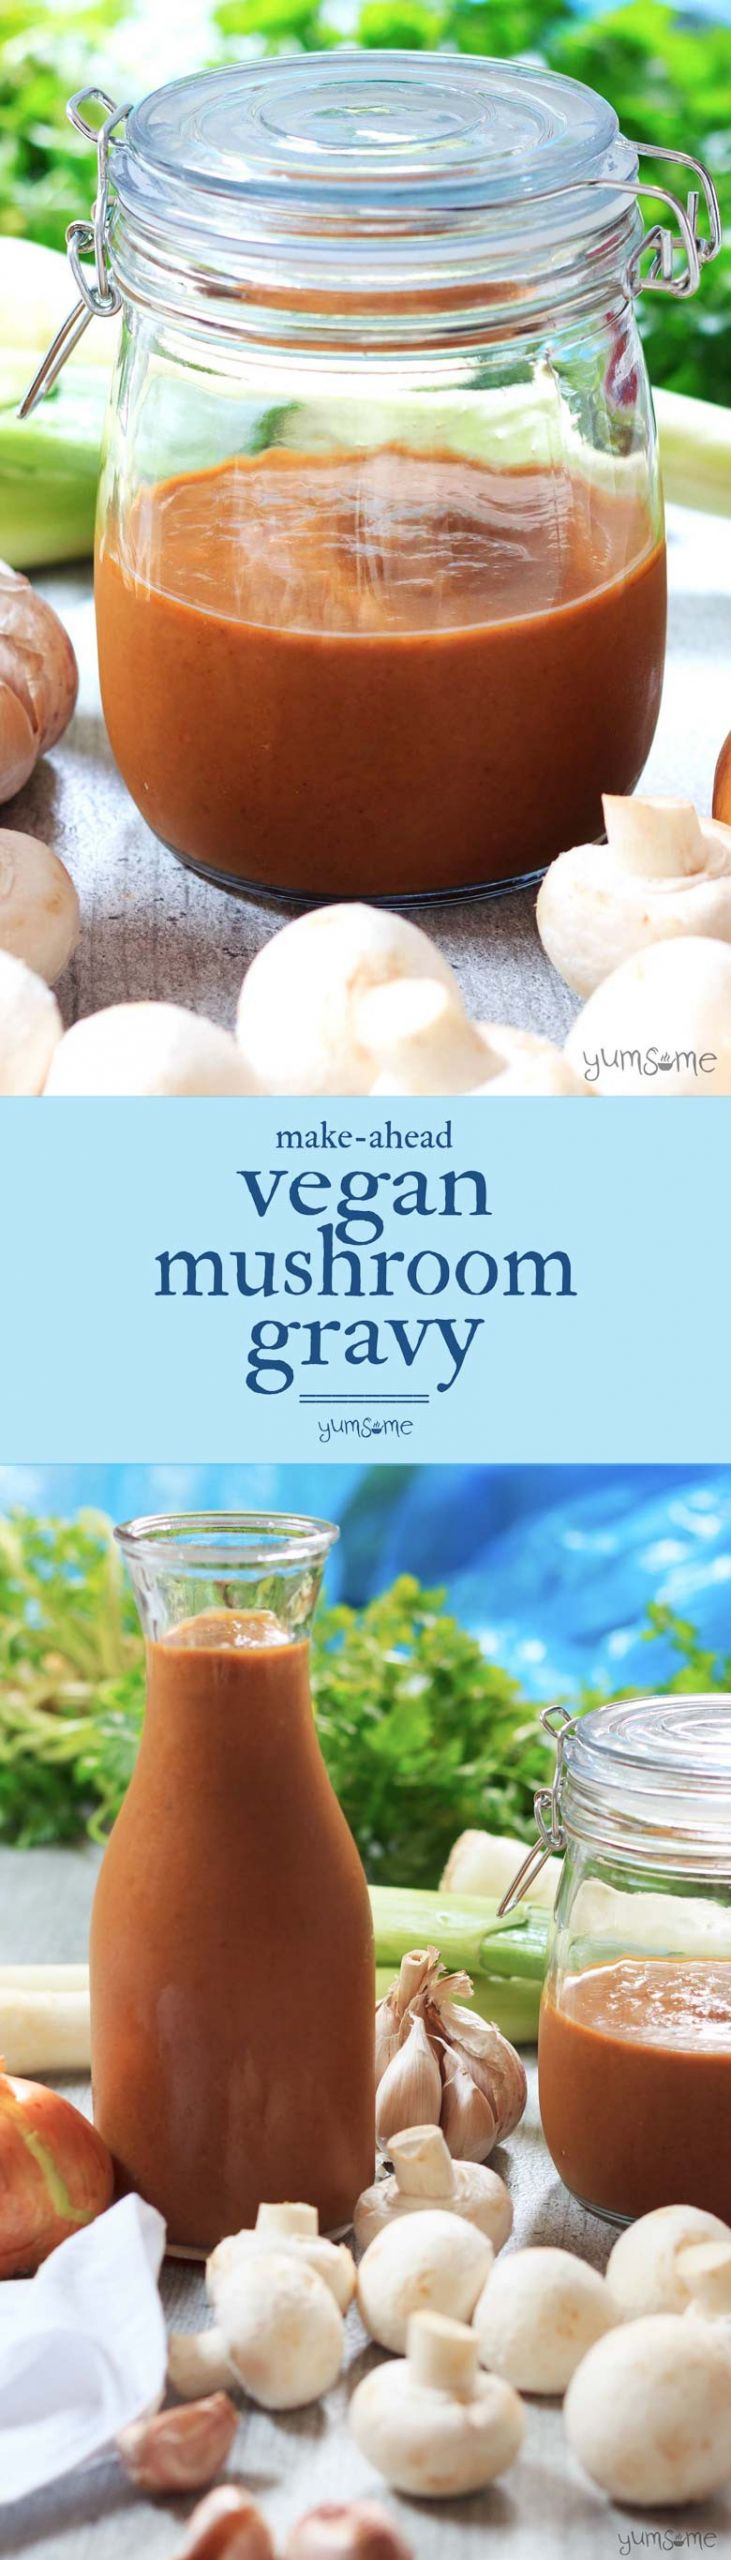 Mushroom Gravy Vegan
 Make Ahead Vegan Mushroom Gravy